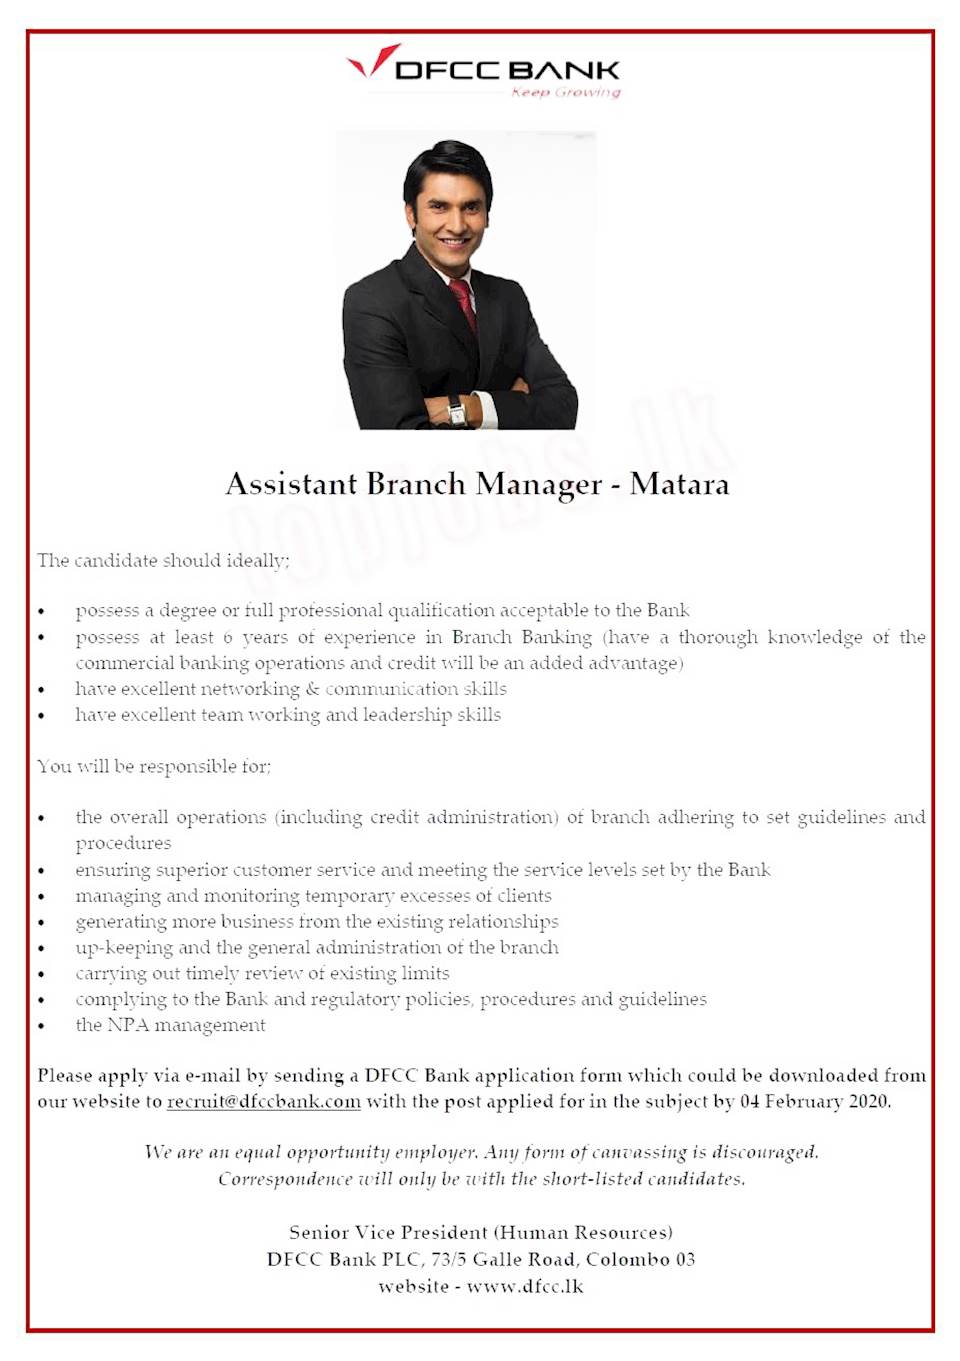 Assistant Branch Manager - Matara